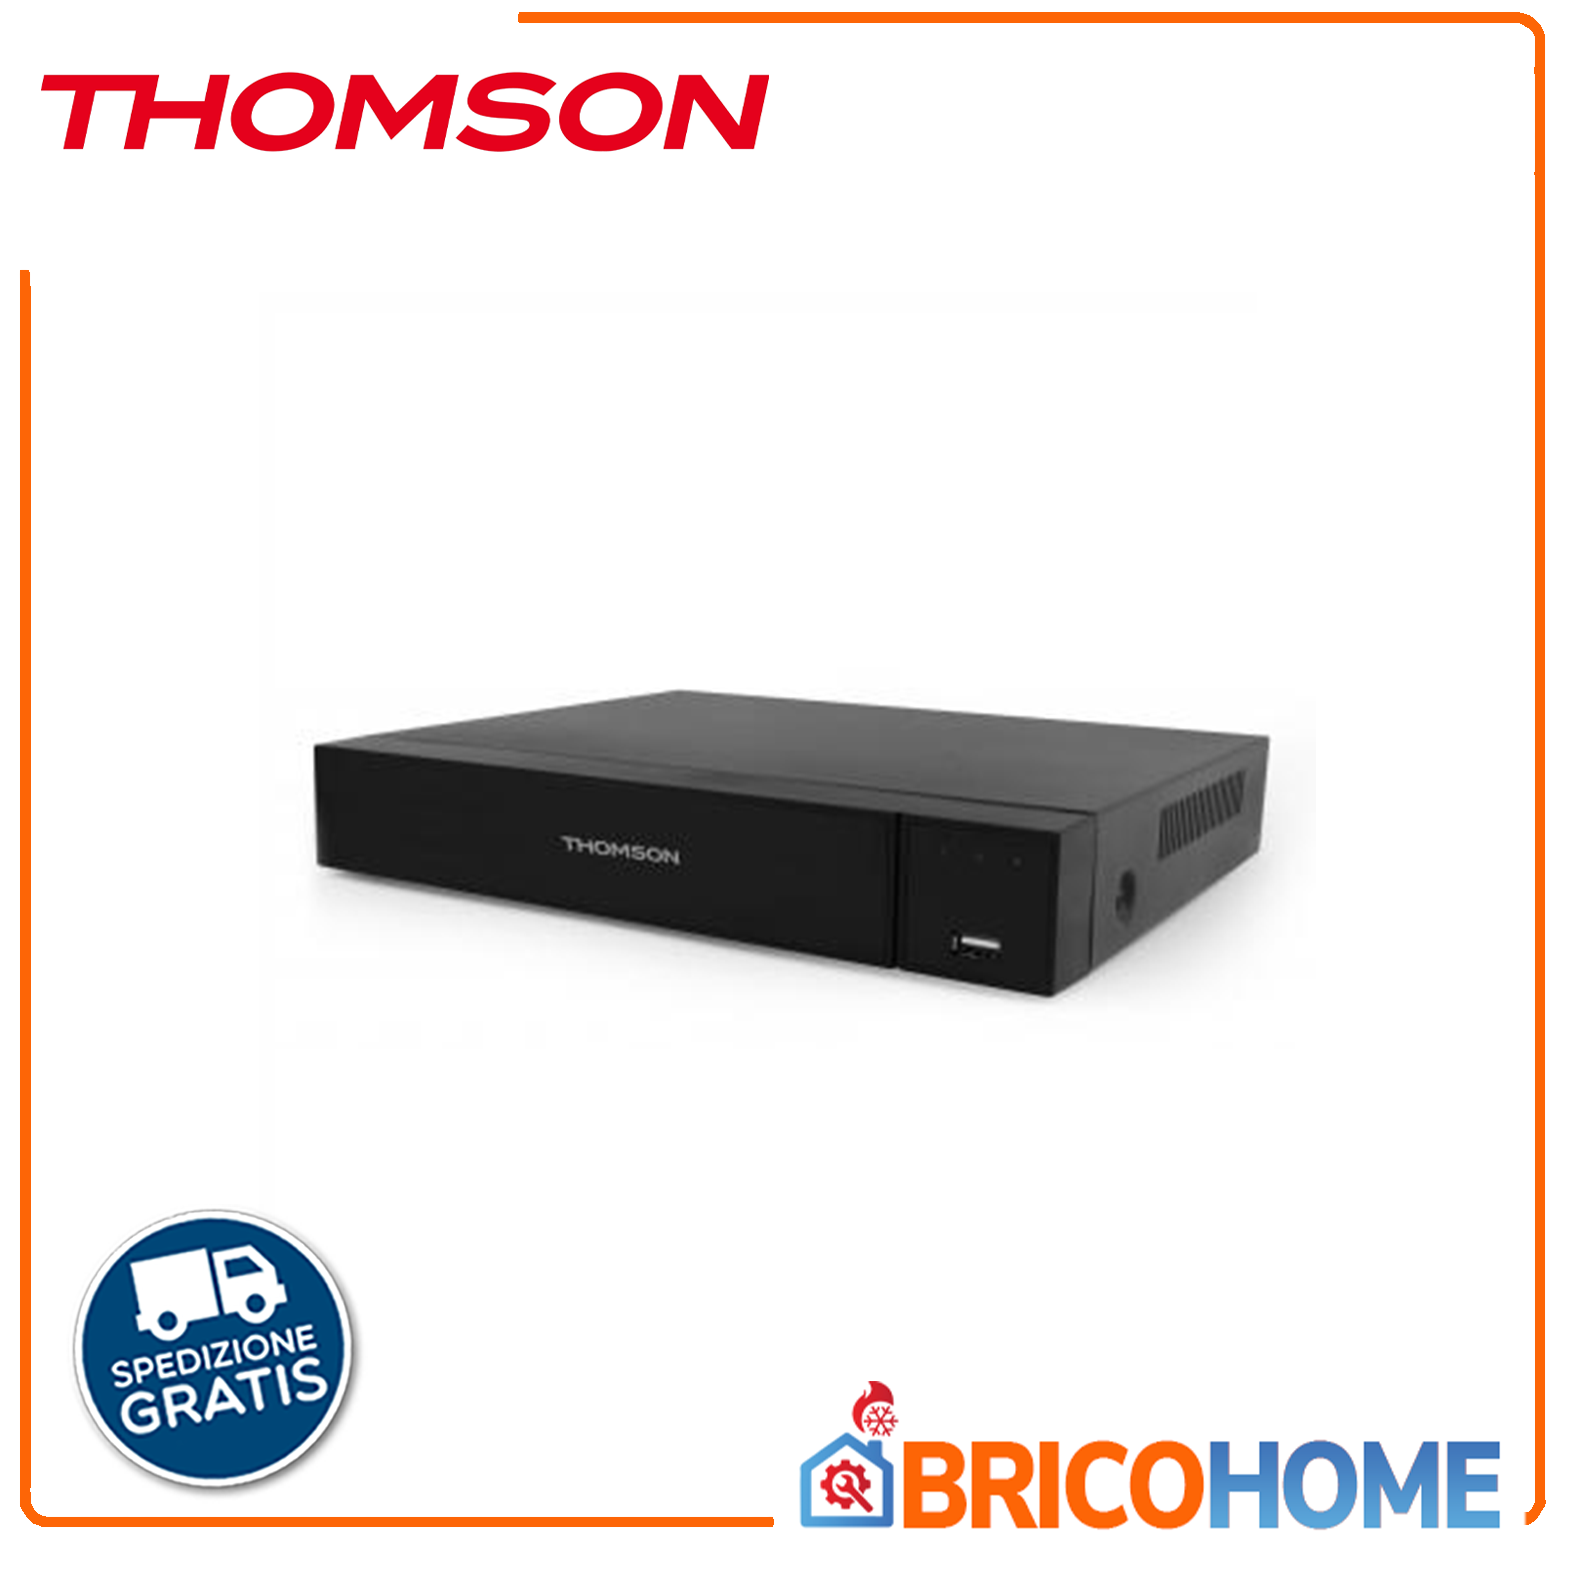 Hybrid DVR 5 megapixel - 16 THOMSON inputs